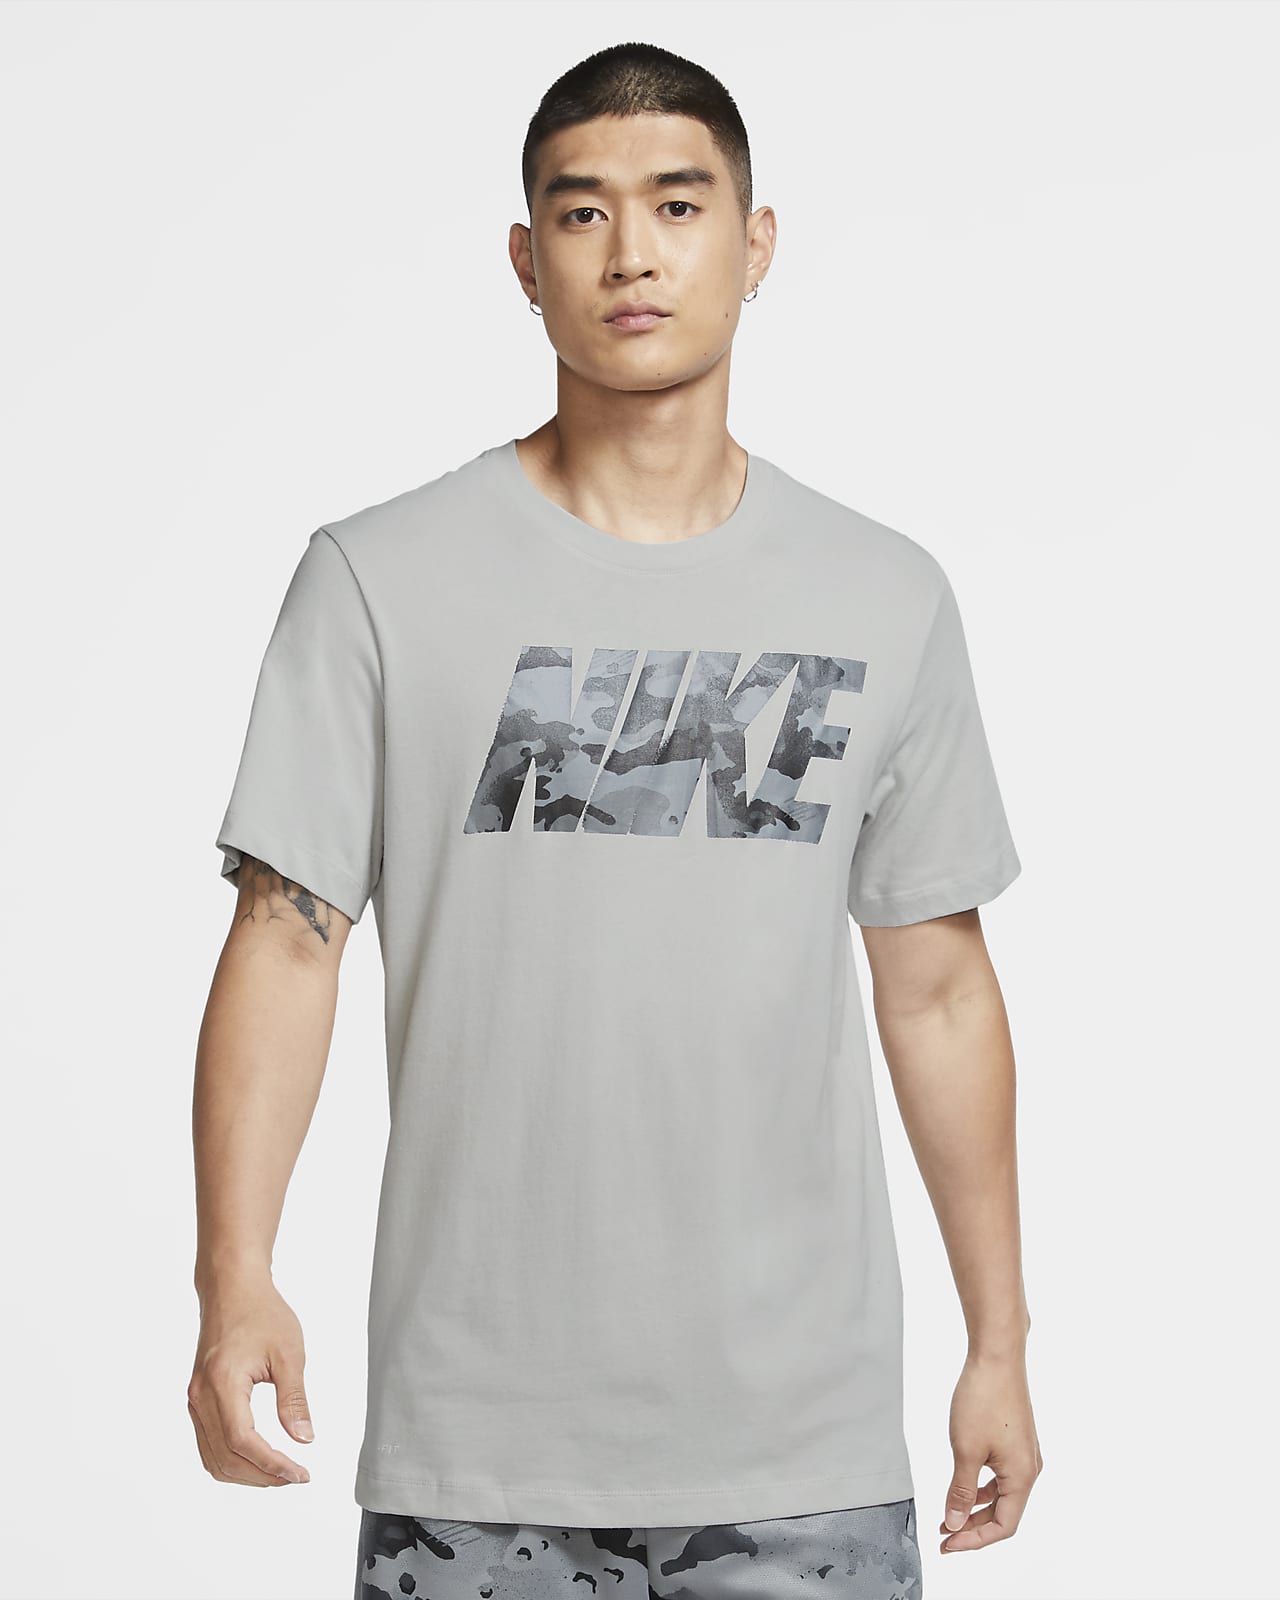 Nike Dri Fit Trainings T Shirt Im Camo Design Mit Logo Fur Herren Nike De